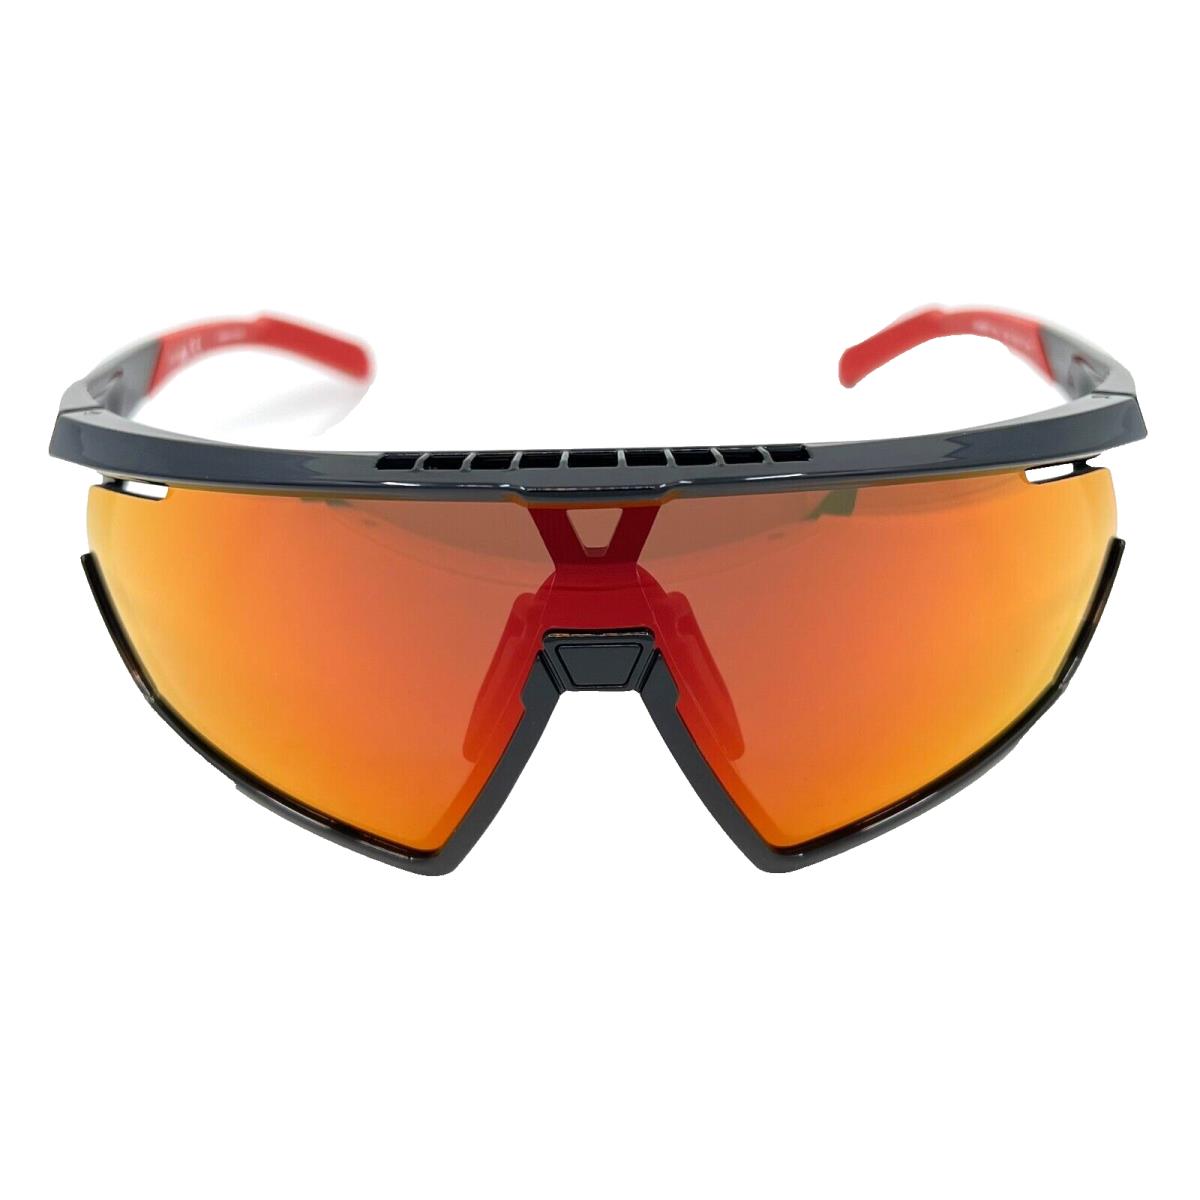 Adidas Sport SP0001 01L - Black / Red Sunglasses Case Lens